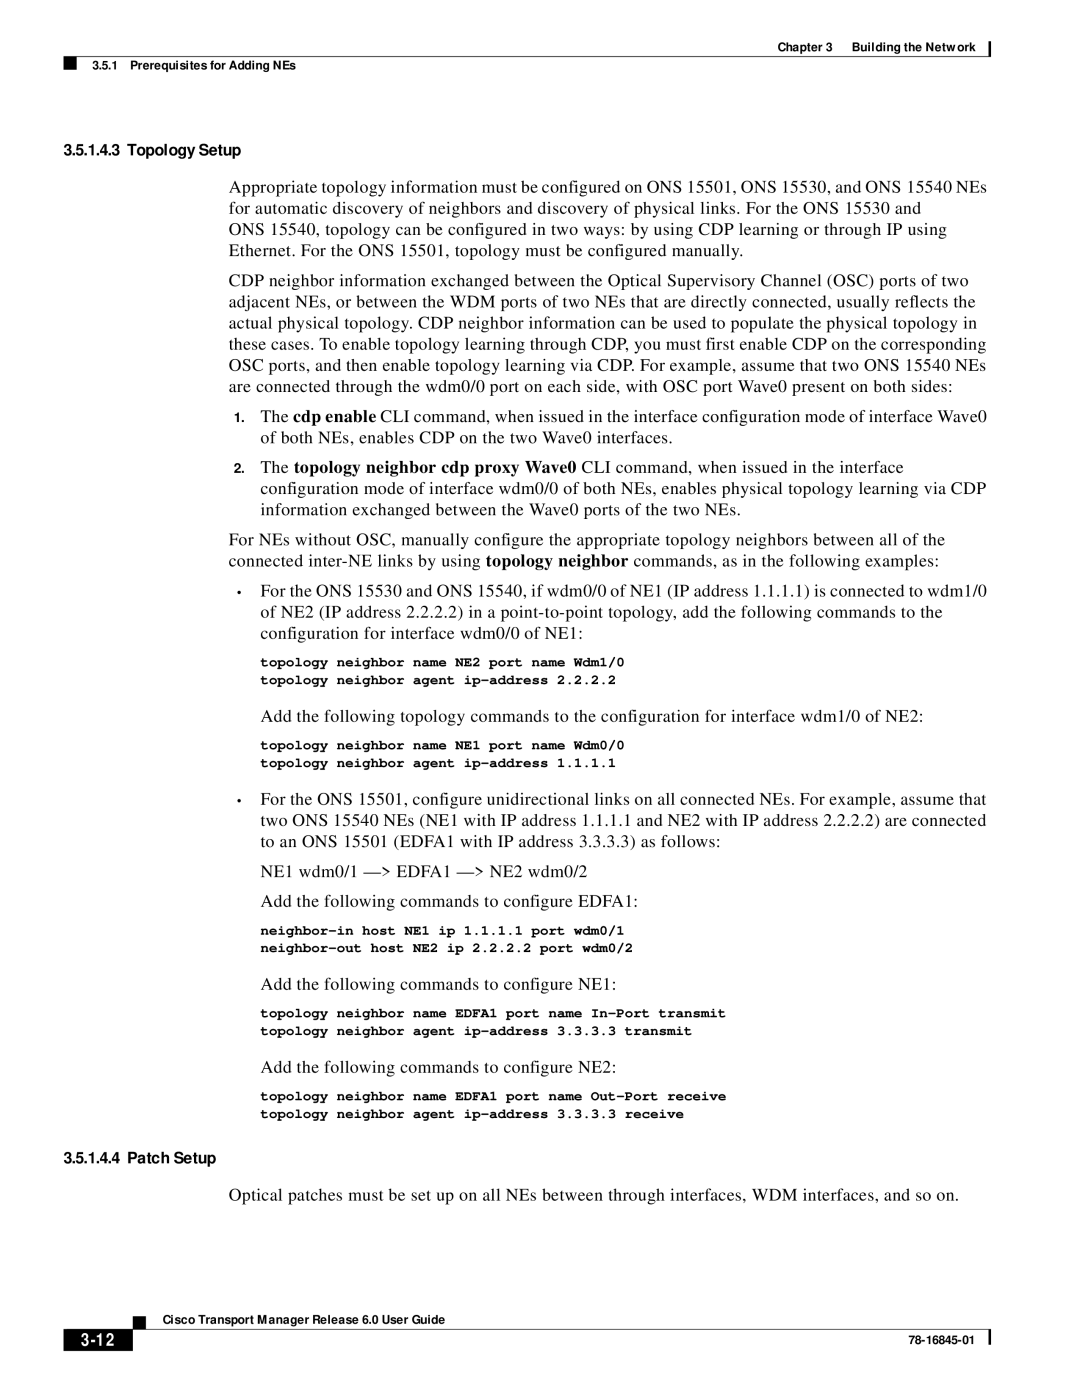 Cisco Systems 78-16845-01 manual Topology Setup, Patch Setup, 3-12 